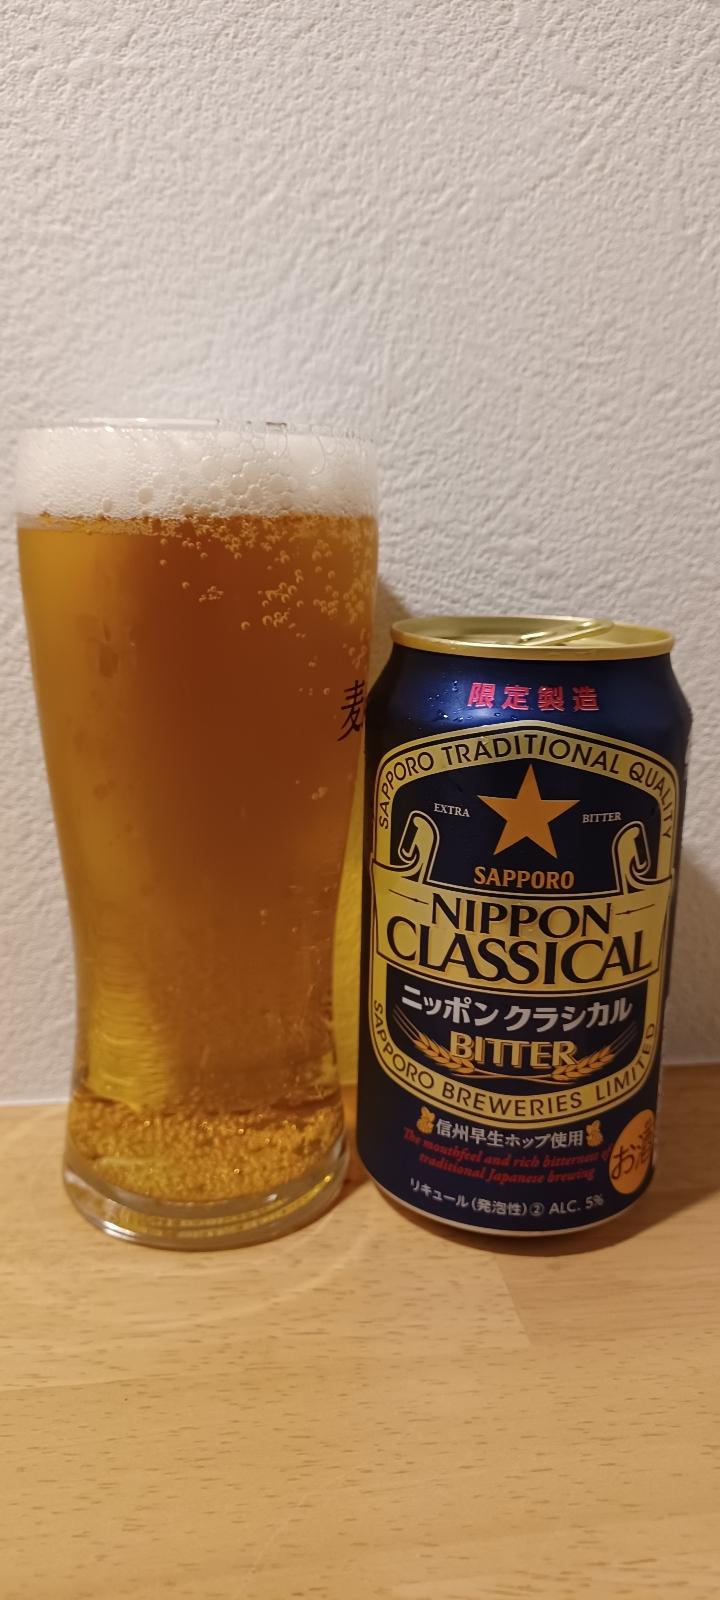 Nippon Classical Bitter